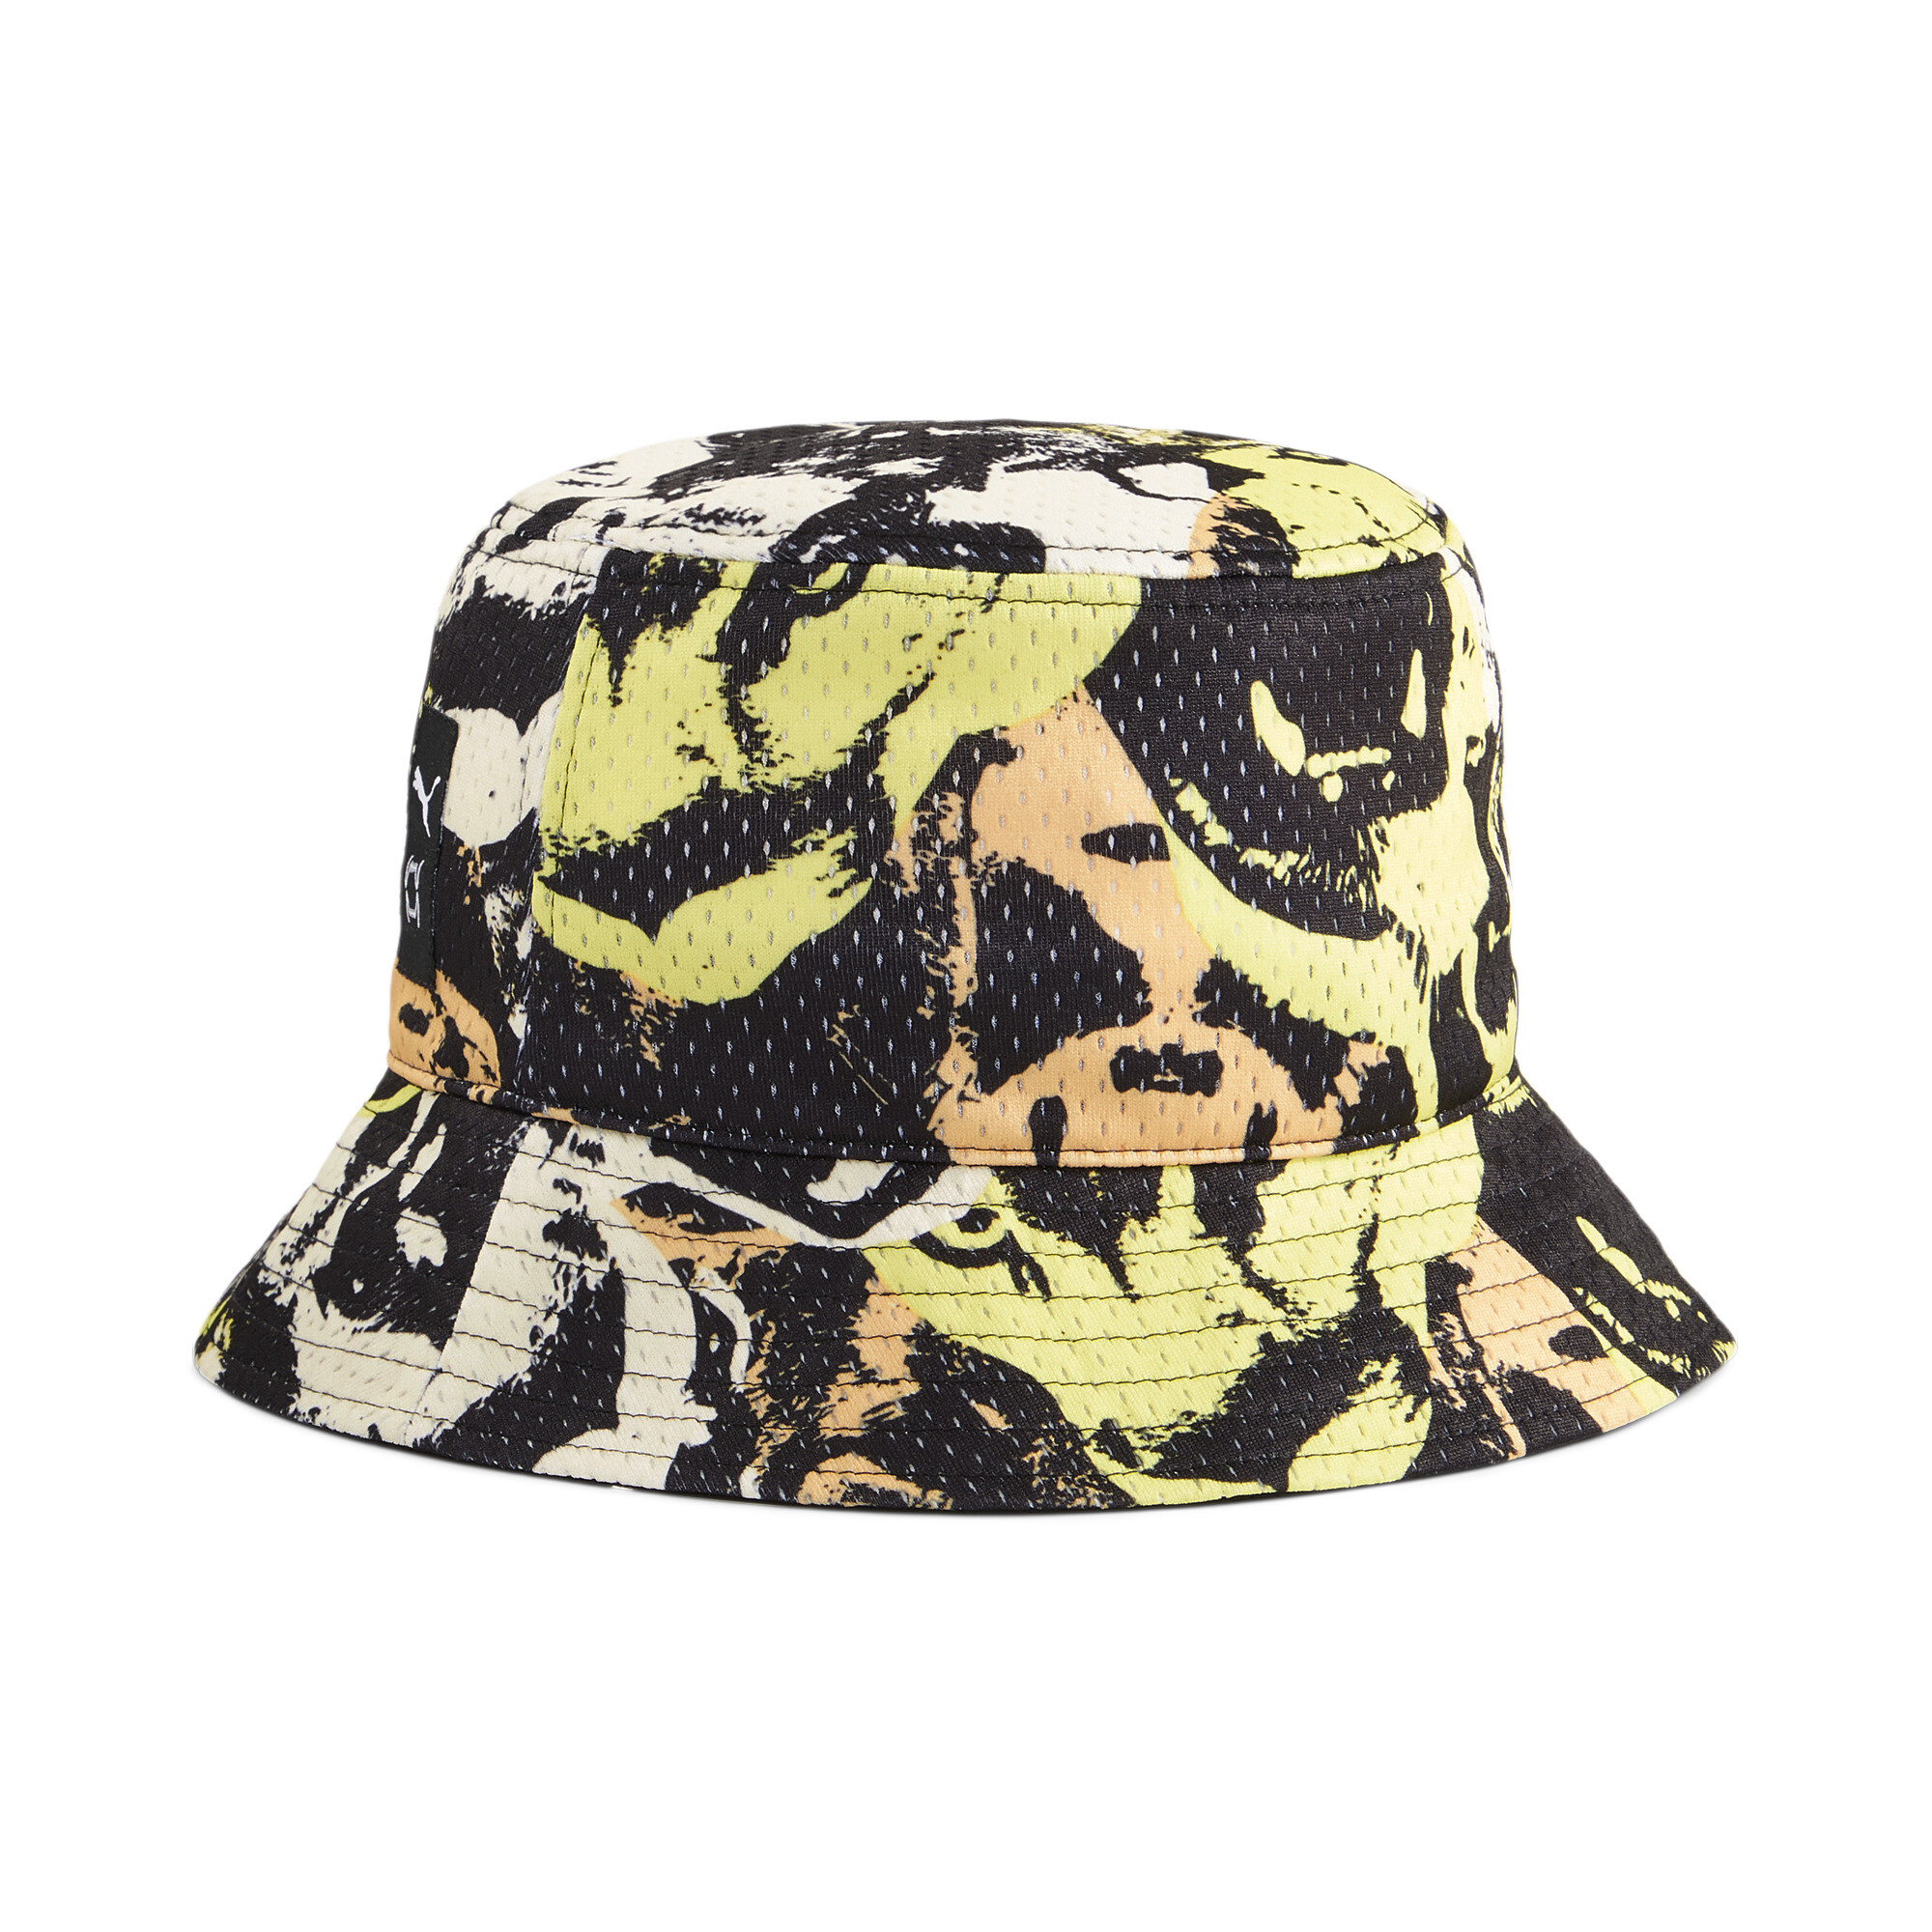 Puma Basketball Bucket Hat, Yellow, Size S/M, Accessories